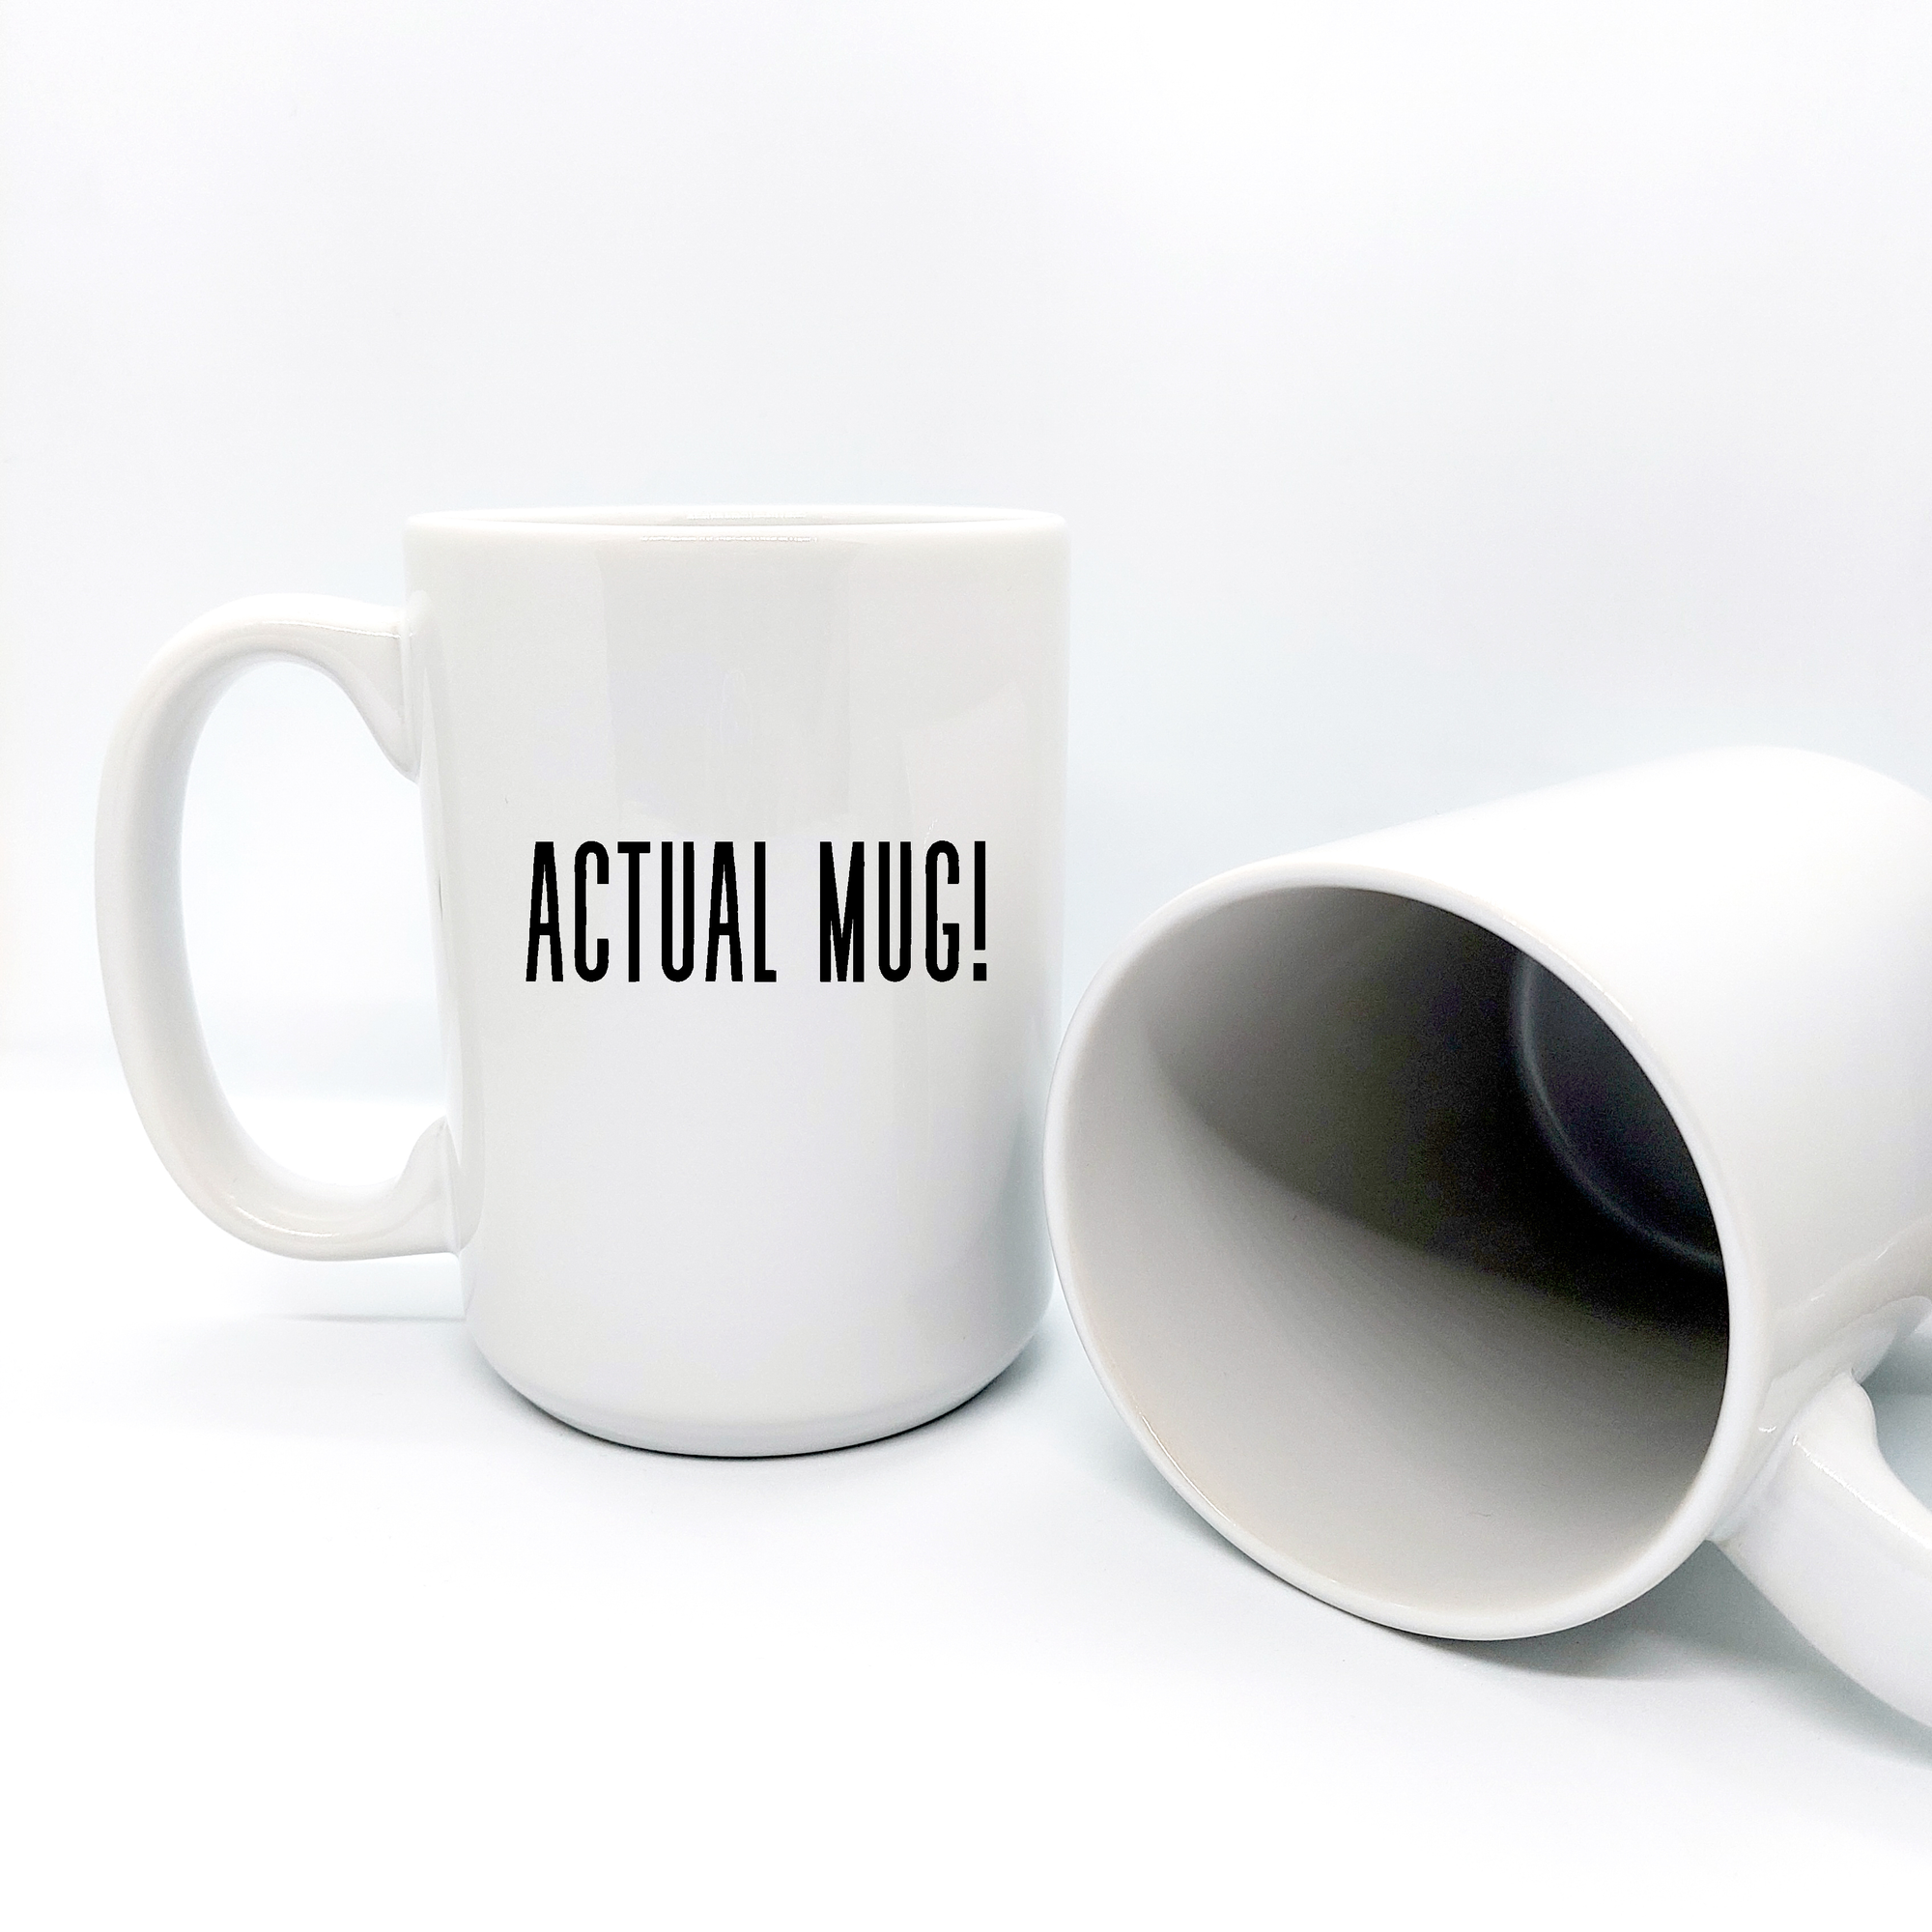 "BE A TOUCAN, NOT A TOUCAN'T." - 15oz Coffee Mug